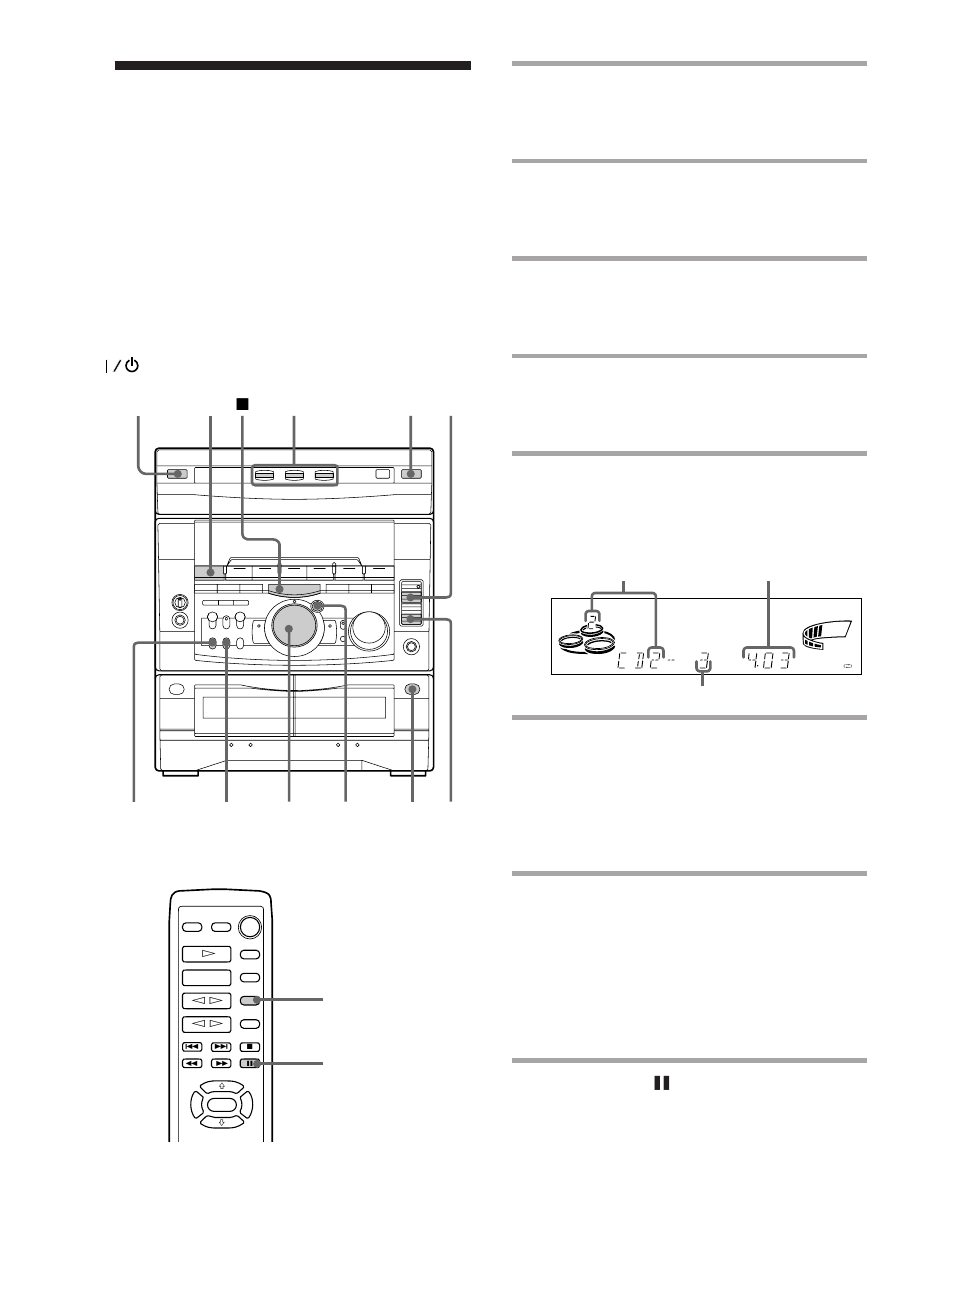 Geprogrammeerde opname van een cd | Sony DHC-RX707 Manuale d'uso | Pagina 26 / 93